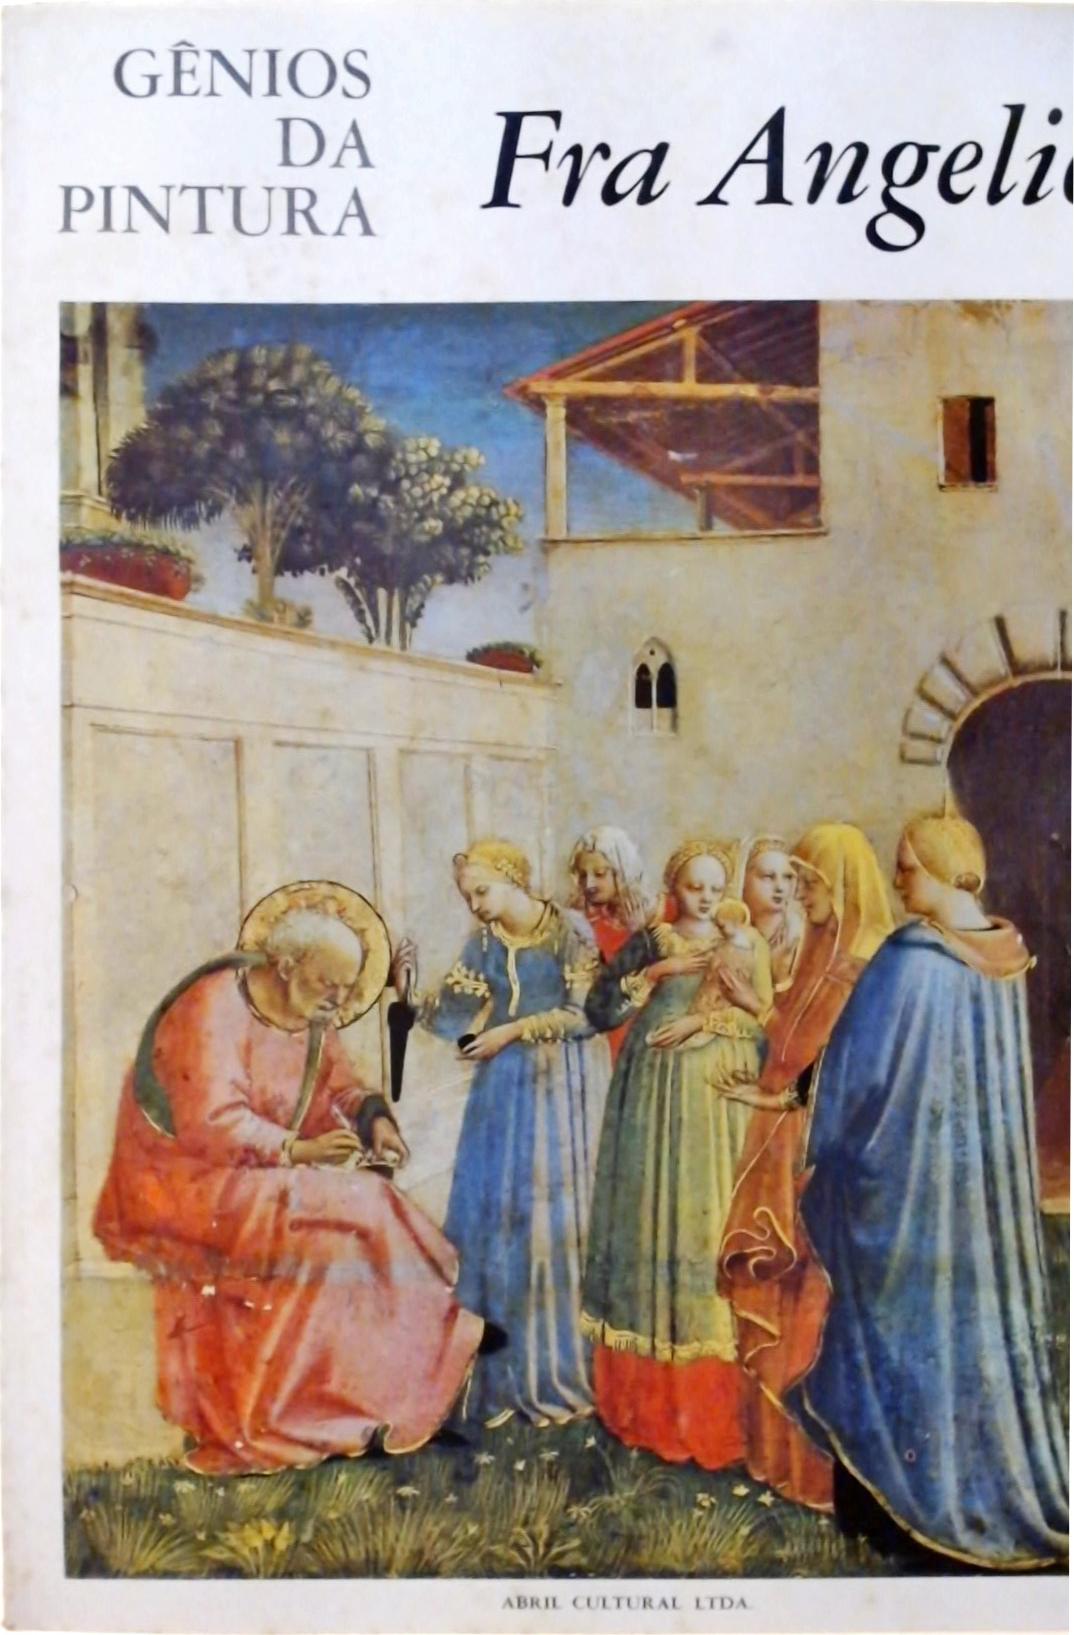 Gênios da Pintura - Fra Angelico